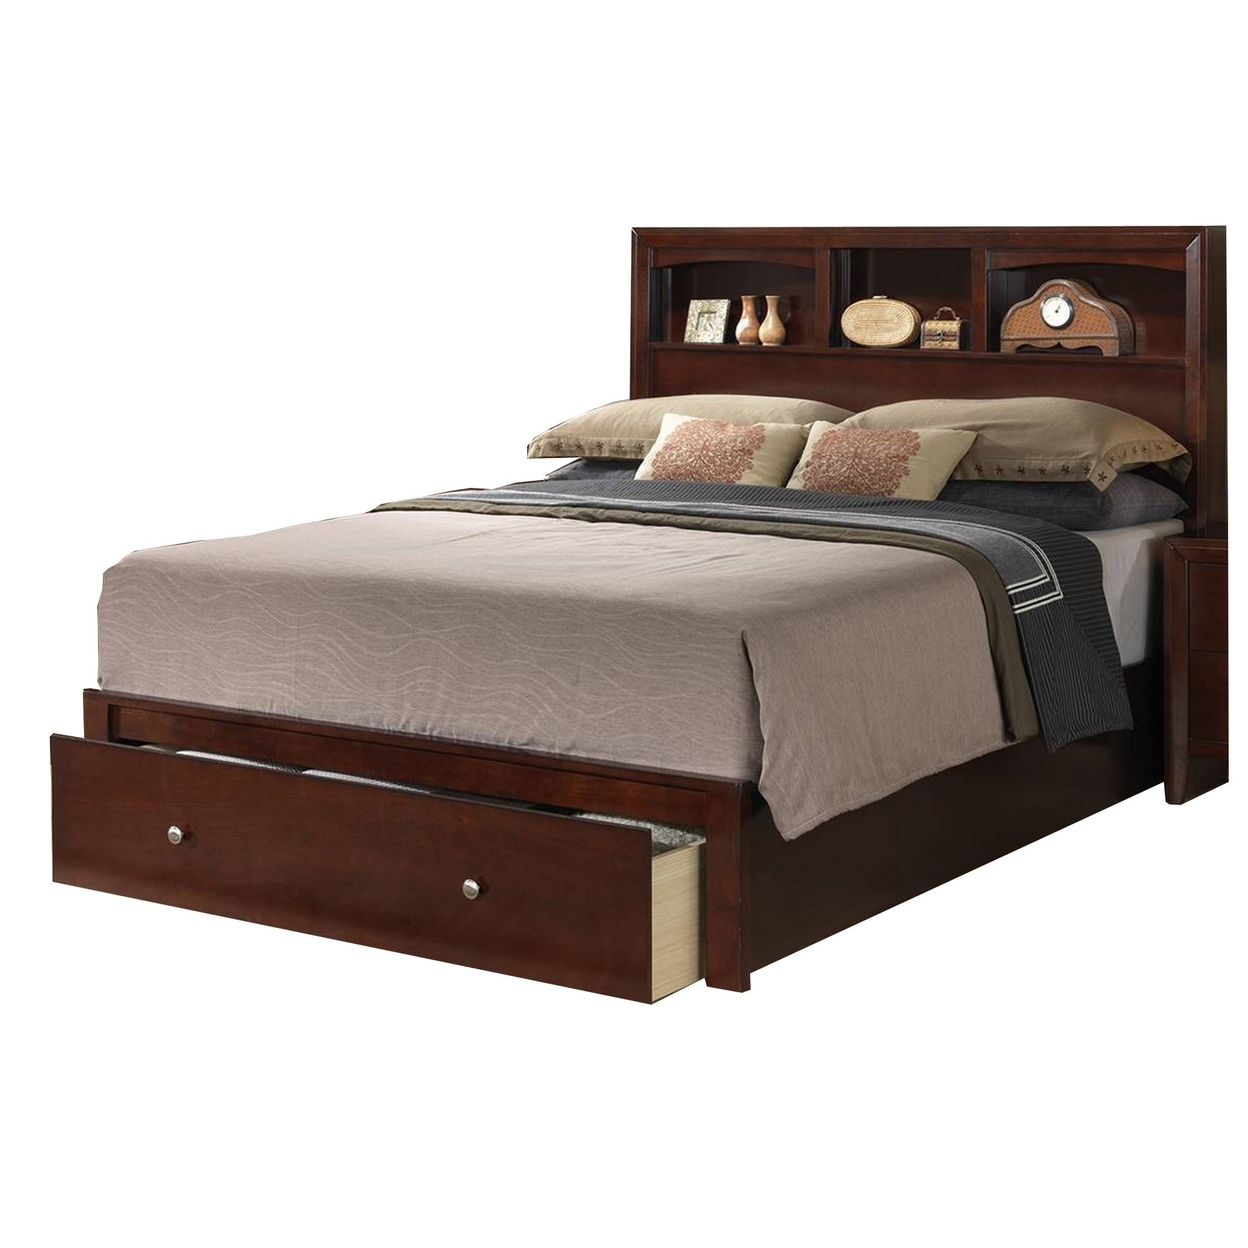 Queen Bed With Storage Footboard, Bookcase Headboard, Modern Cherry Brown- Saltoro Sherpi